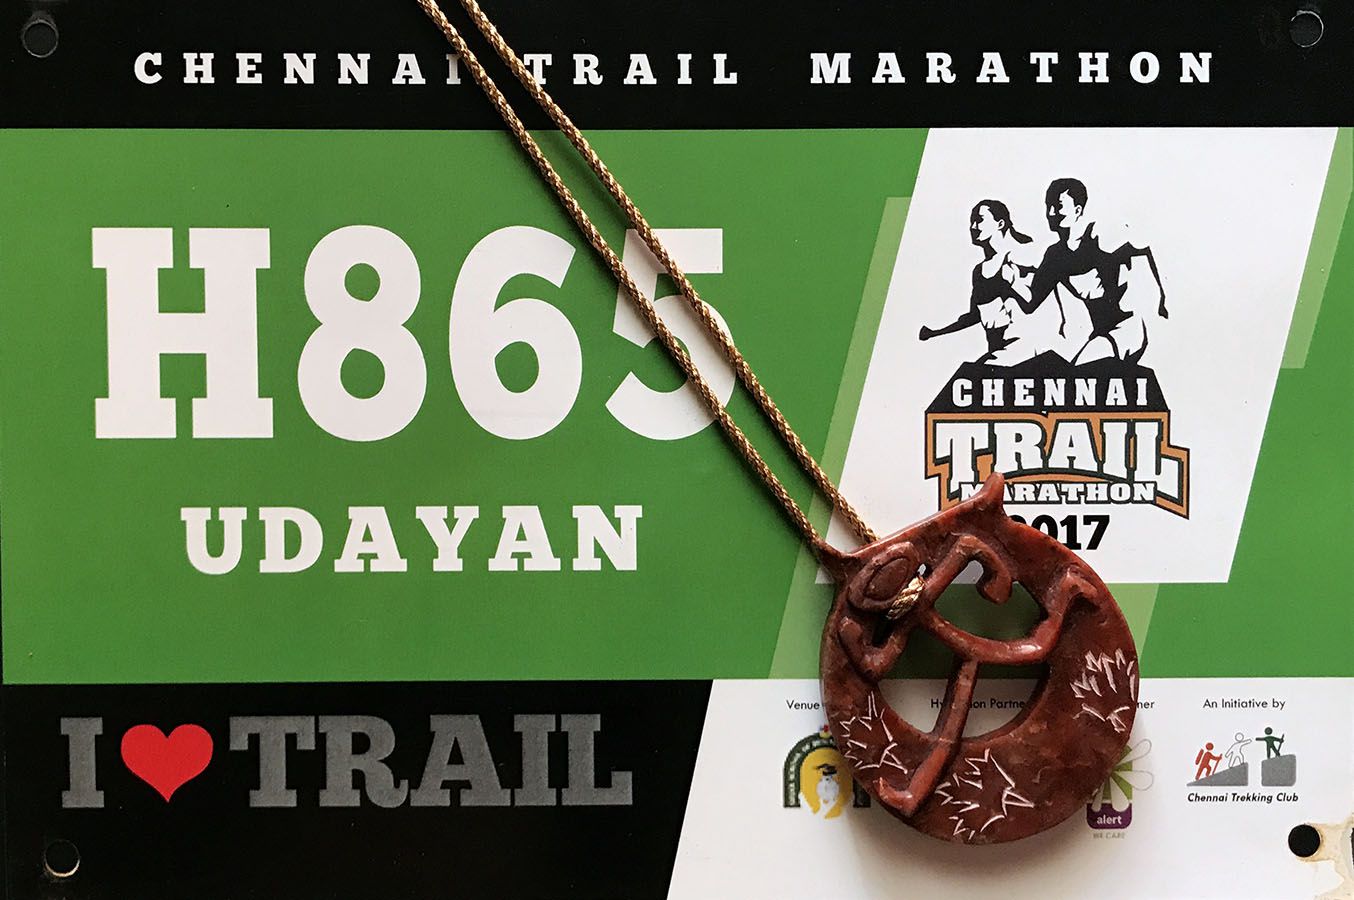 Chennai Trail Marathon 2017